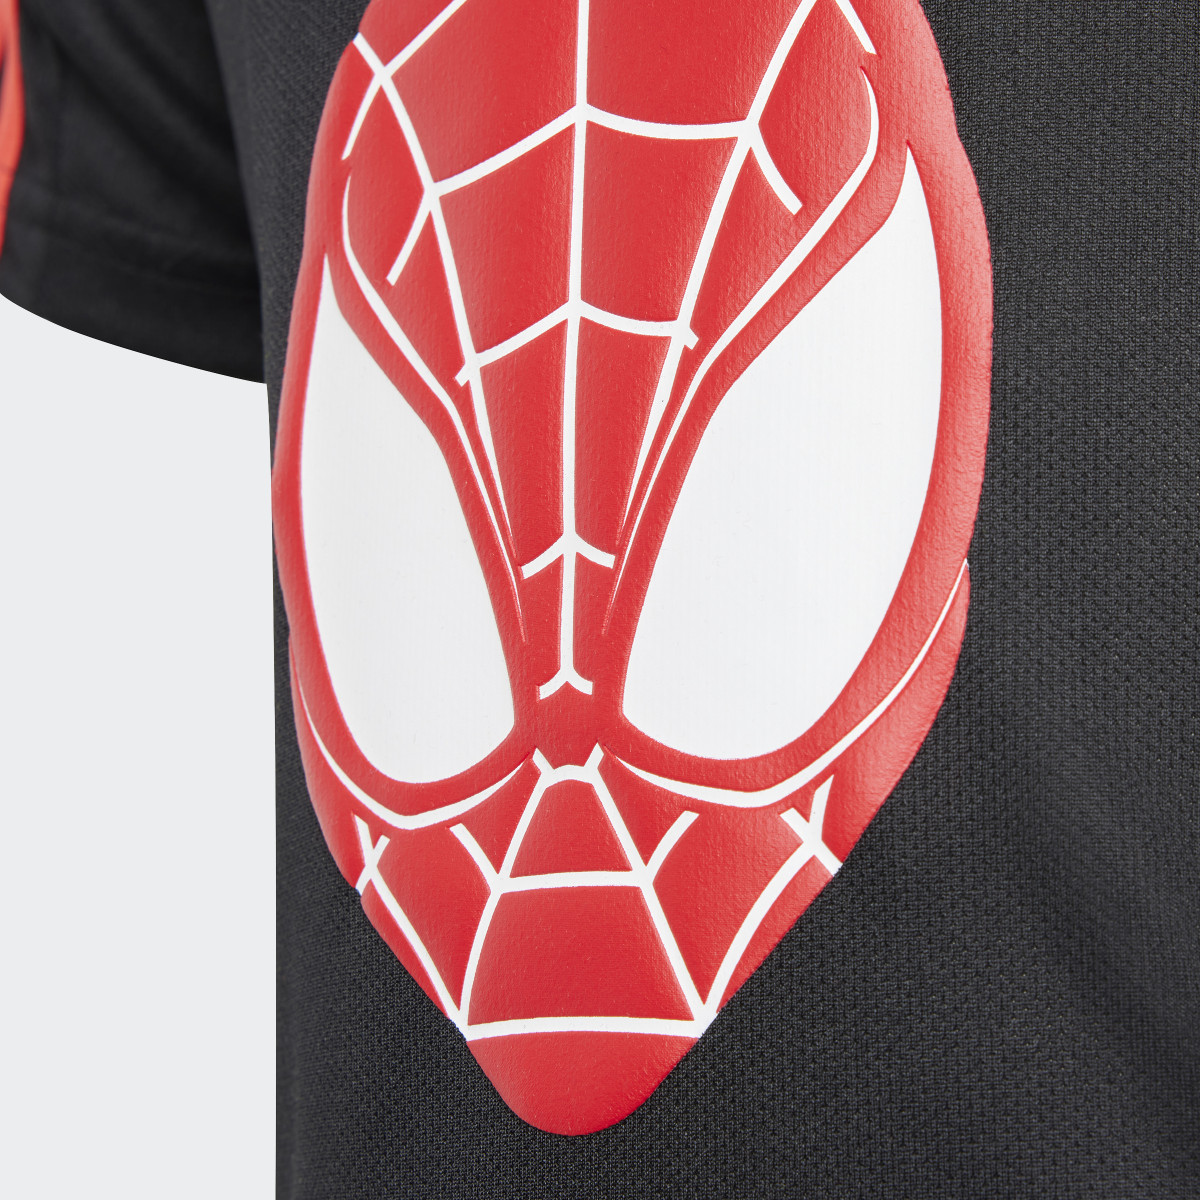 Adidas x Marvel Spider-Man Tee. 5